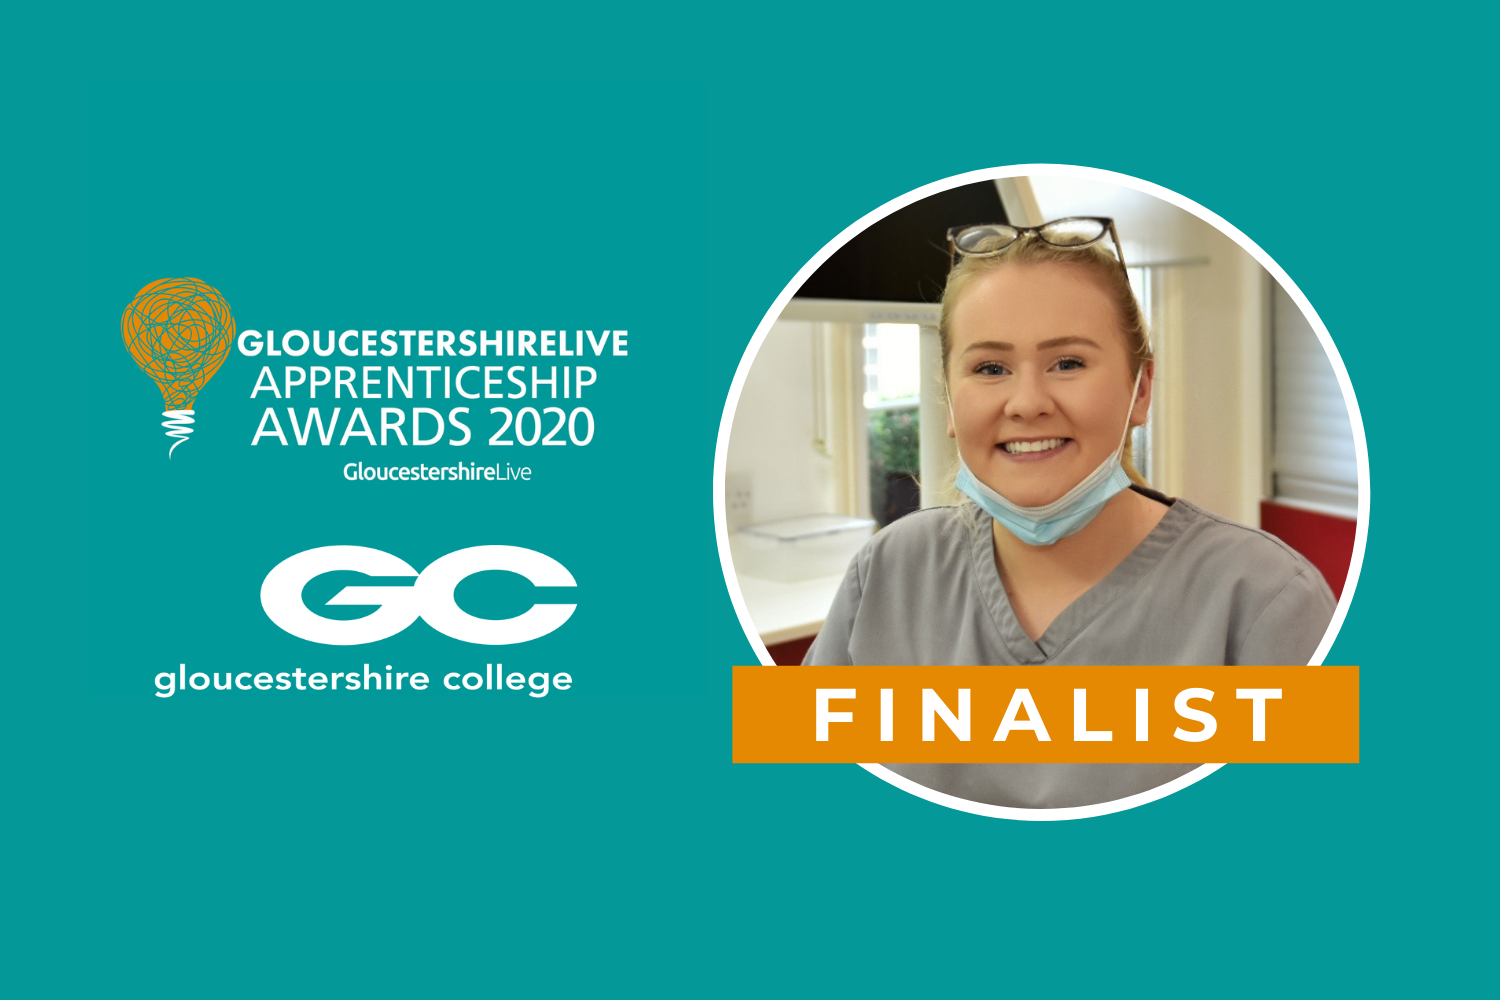 Apprentice Spotlight: Imogen Collins, GloucestershireLive Apprenticeship Awards 2020 Finalist